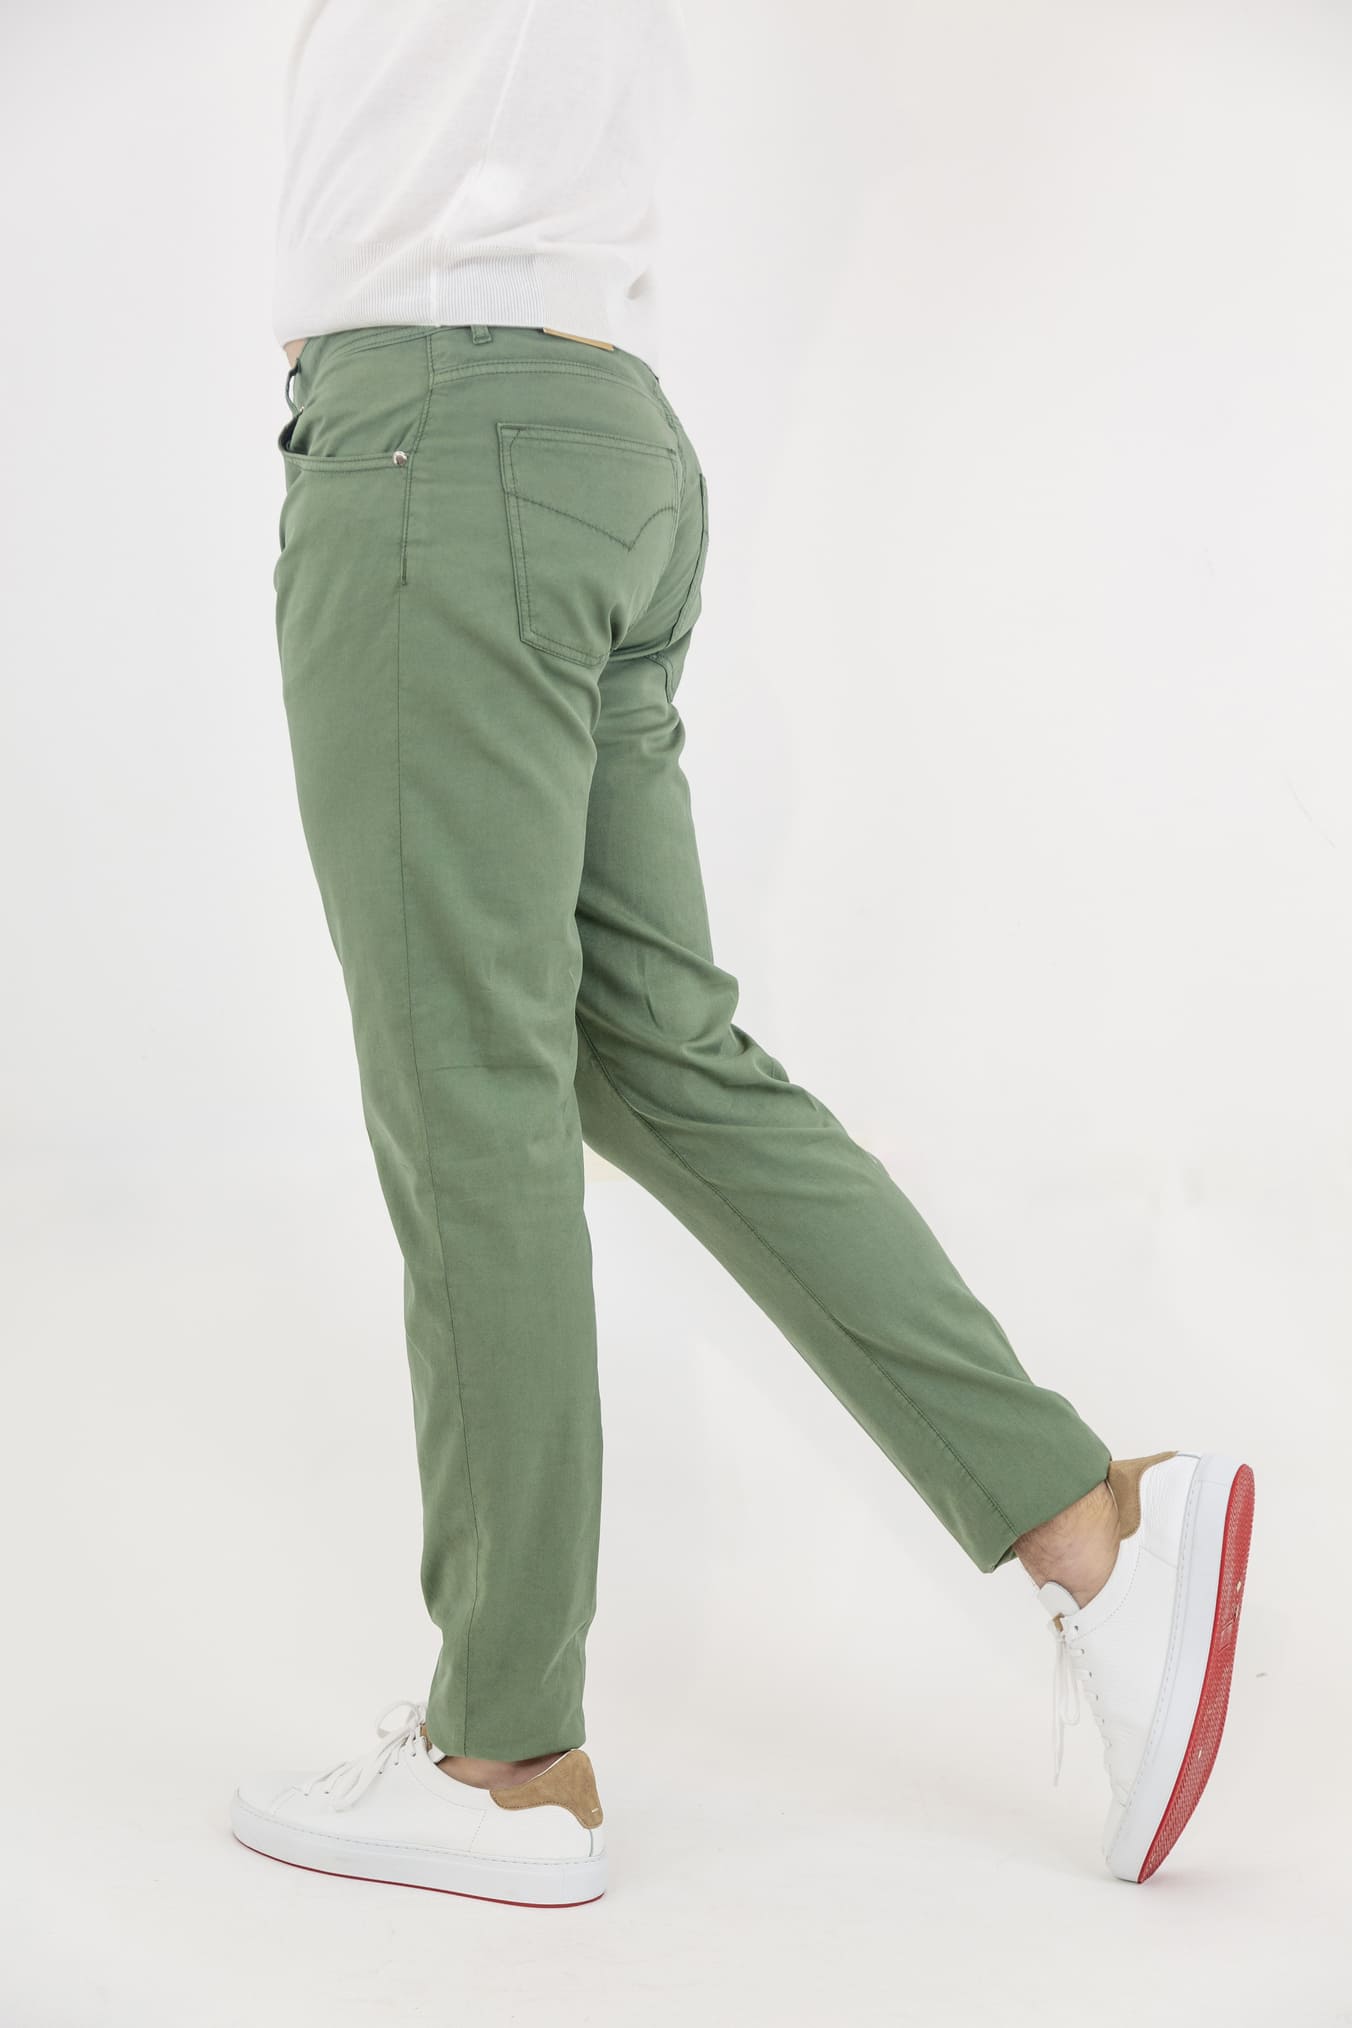 PESCAROLO 5 Pocket Trousers mod. Nerano Cotton Silk Green